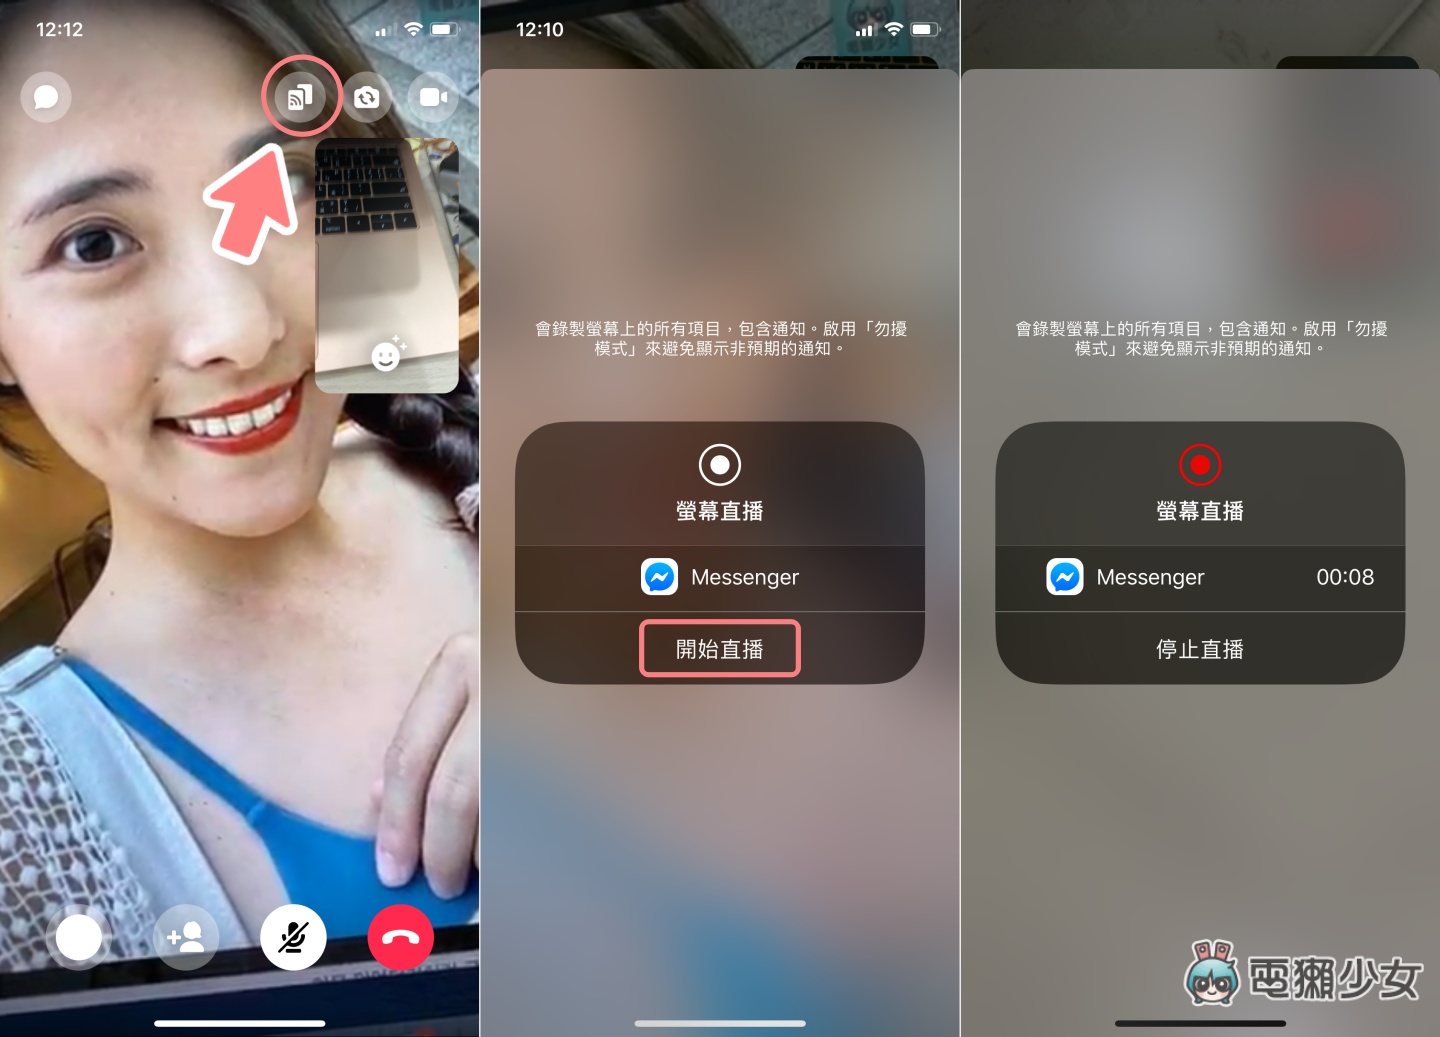 FB Messenger 新功能 用手機版視訊也可『 分享螢幕畫面 』Android、iOS 都可以喔！